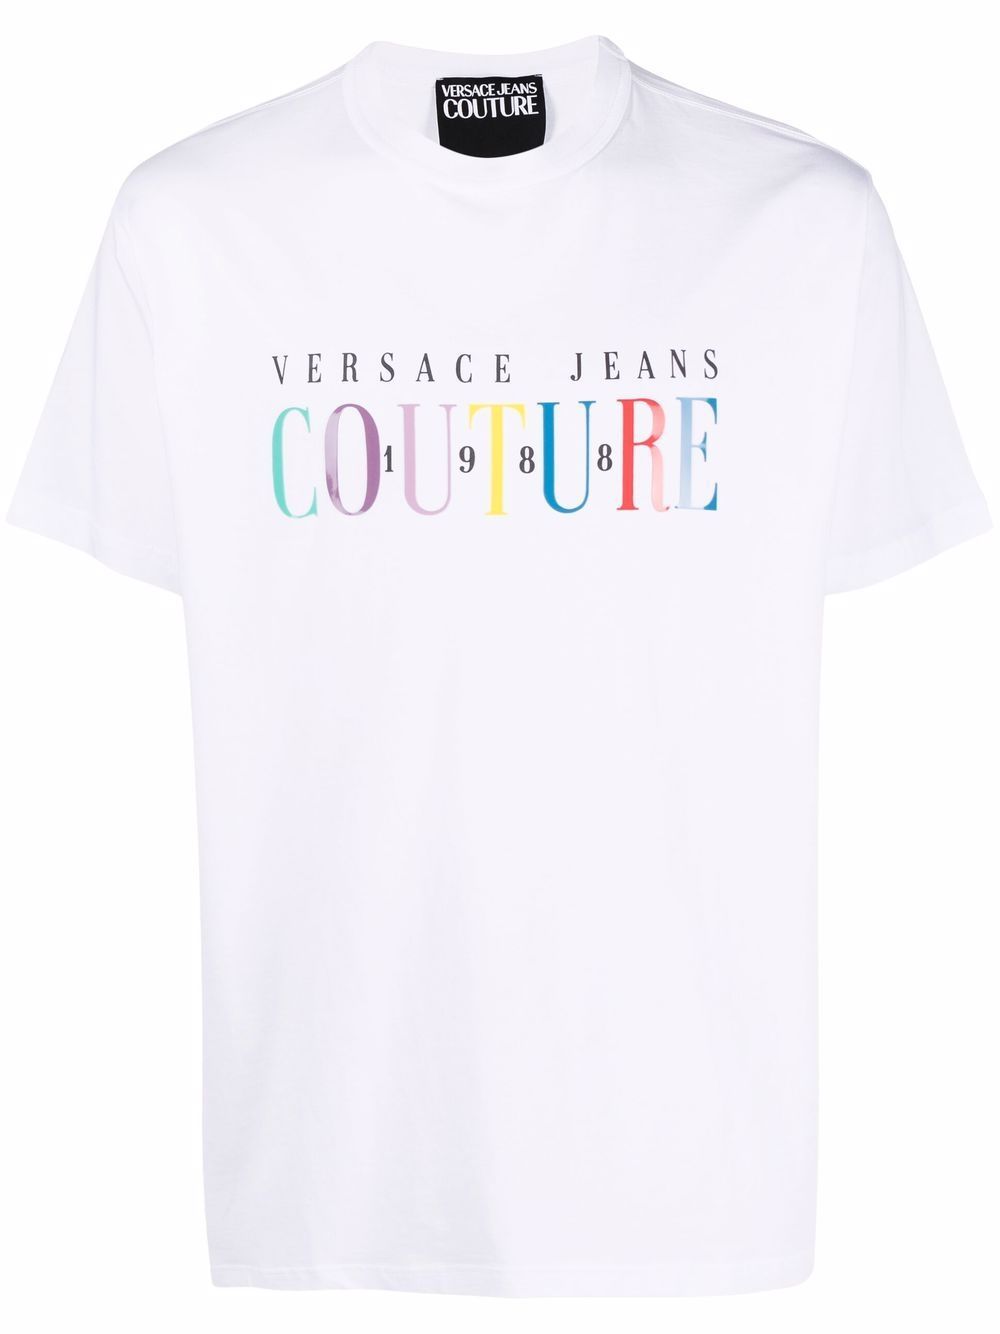 Versace Jeans Couture Men's White Multi Color Logo Short Sleeve Crew Neck T-Shirt